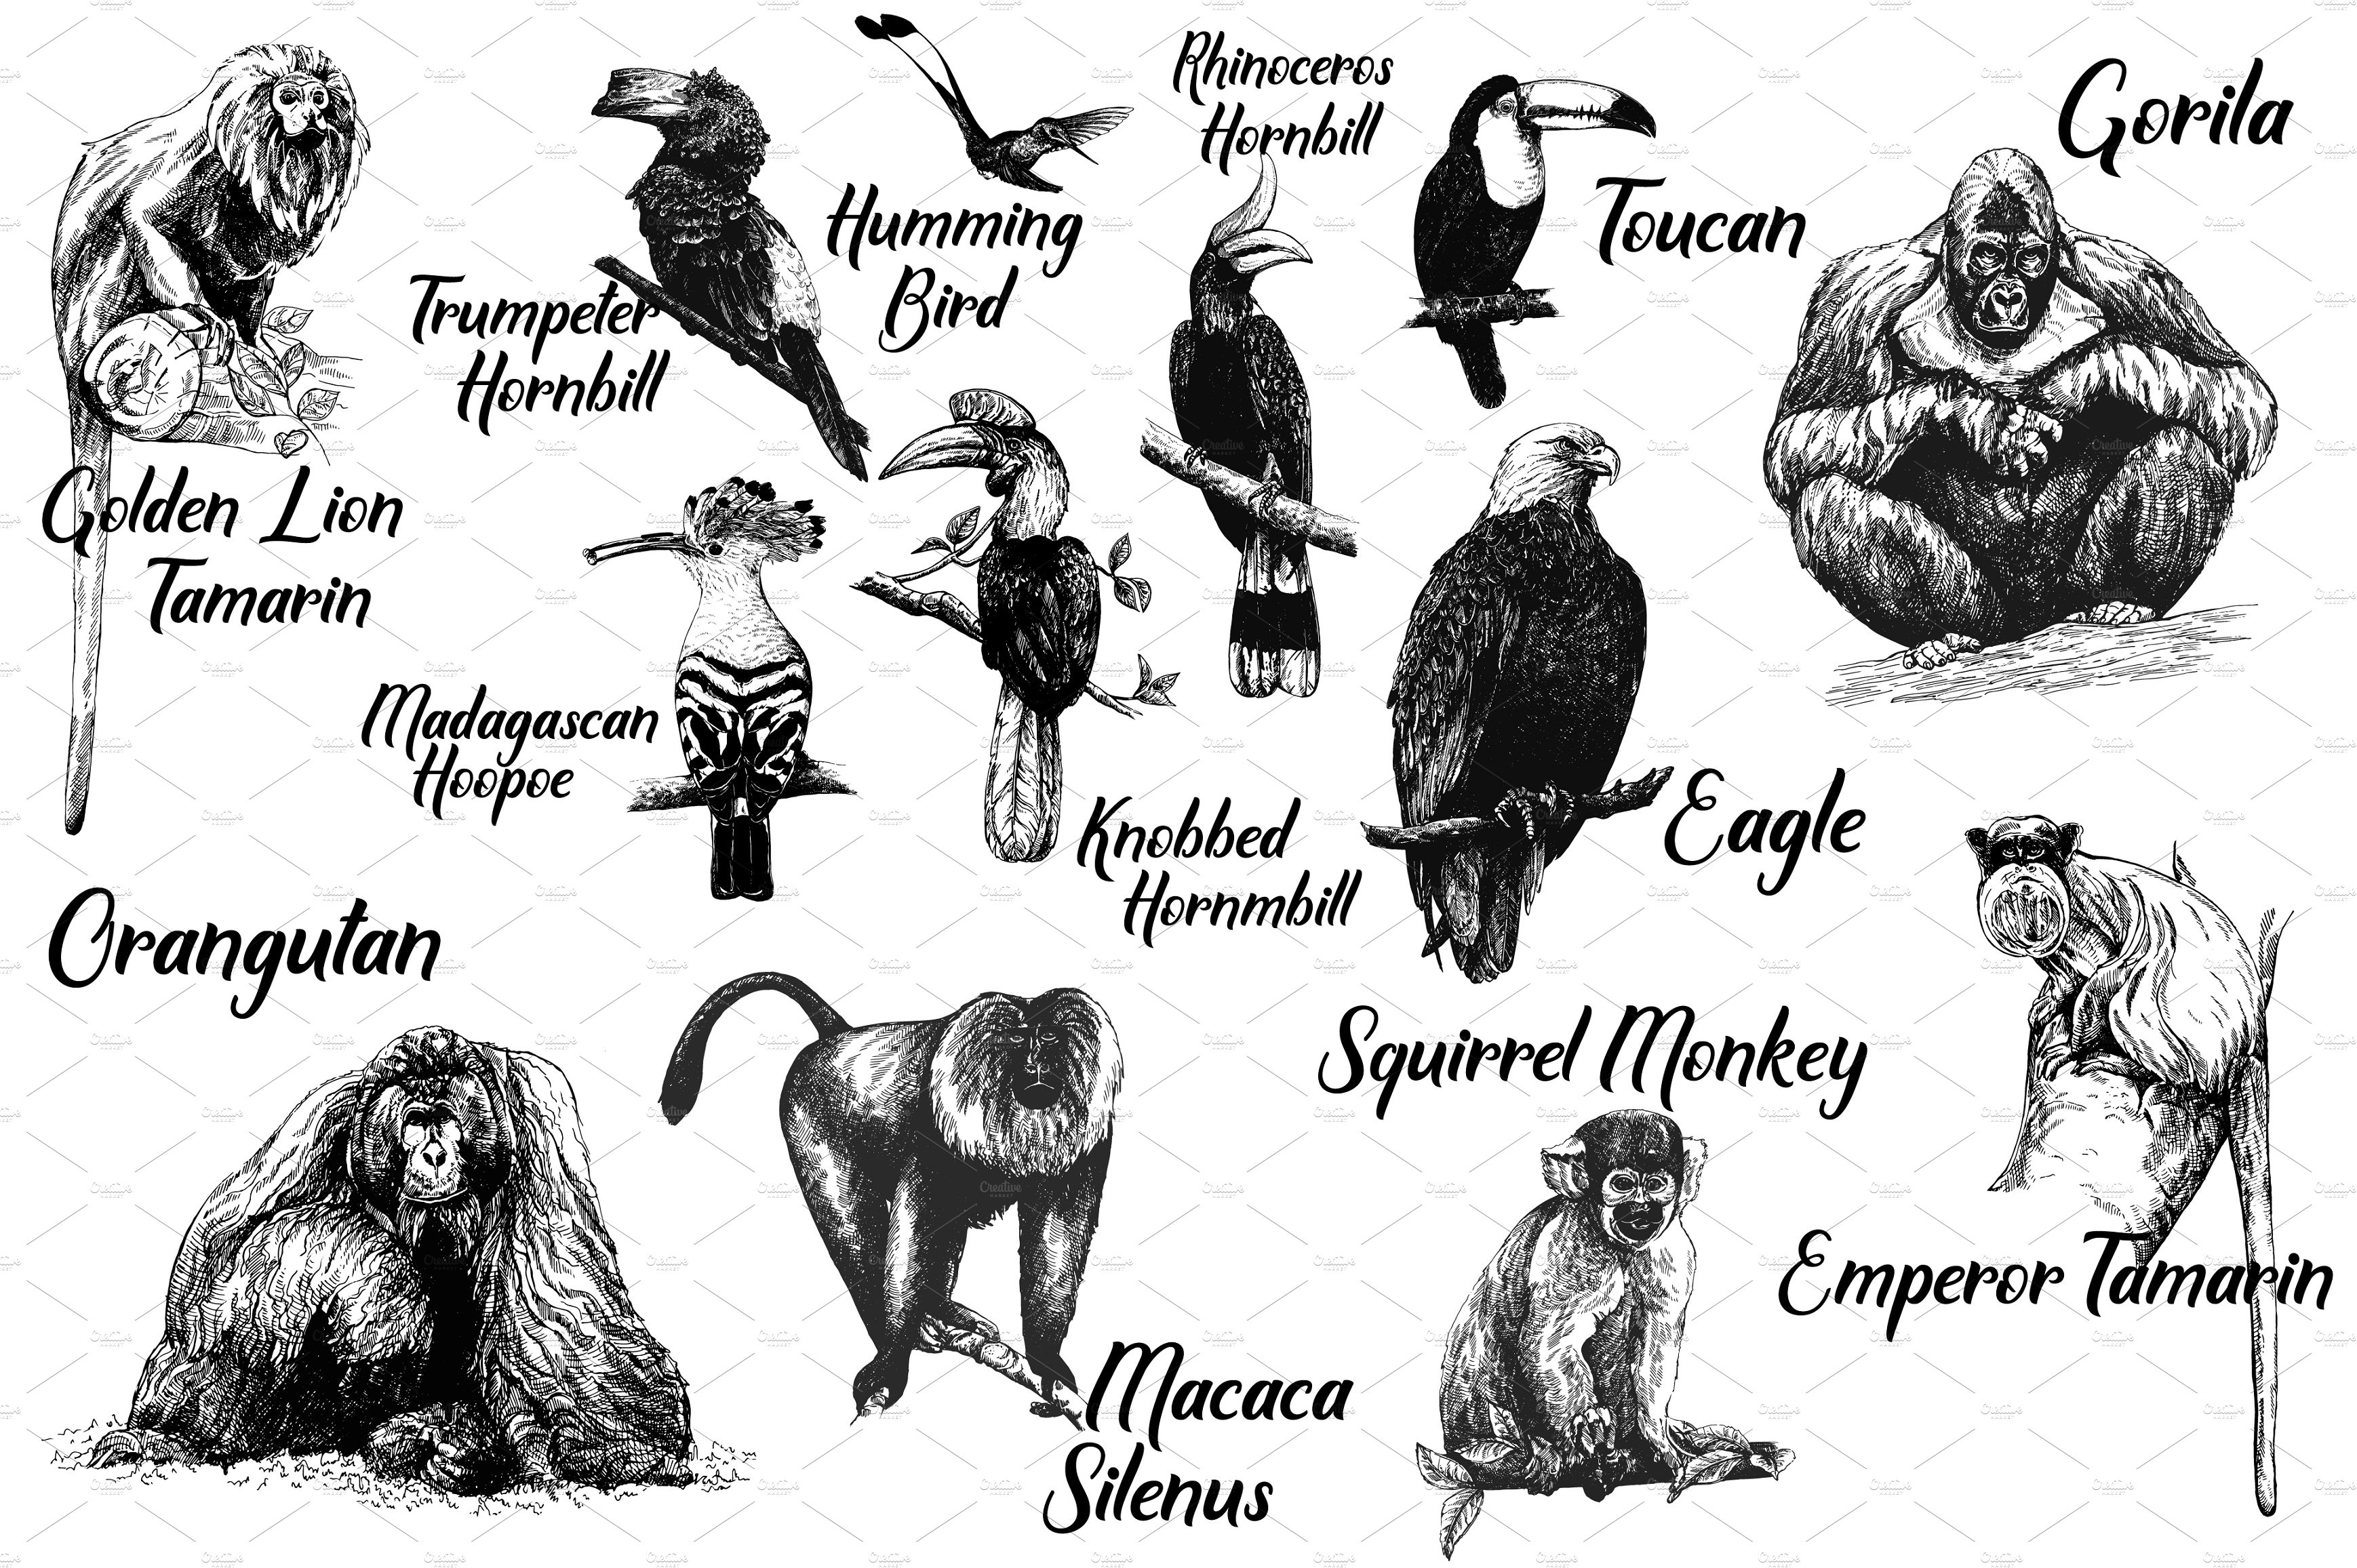 Birds & Primates cover image.